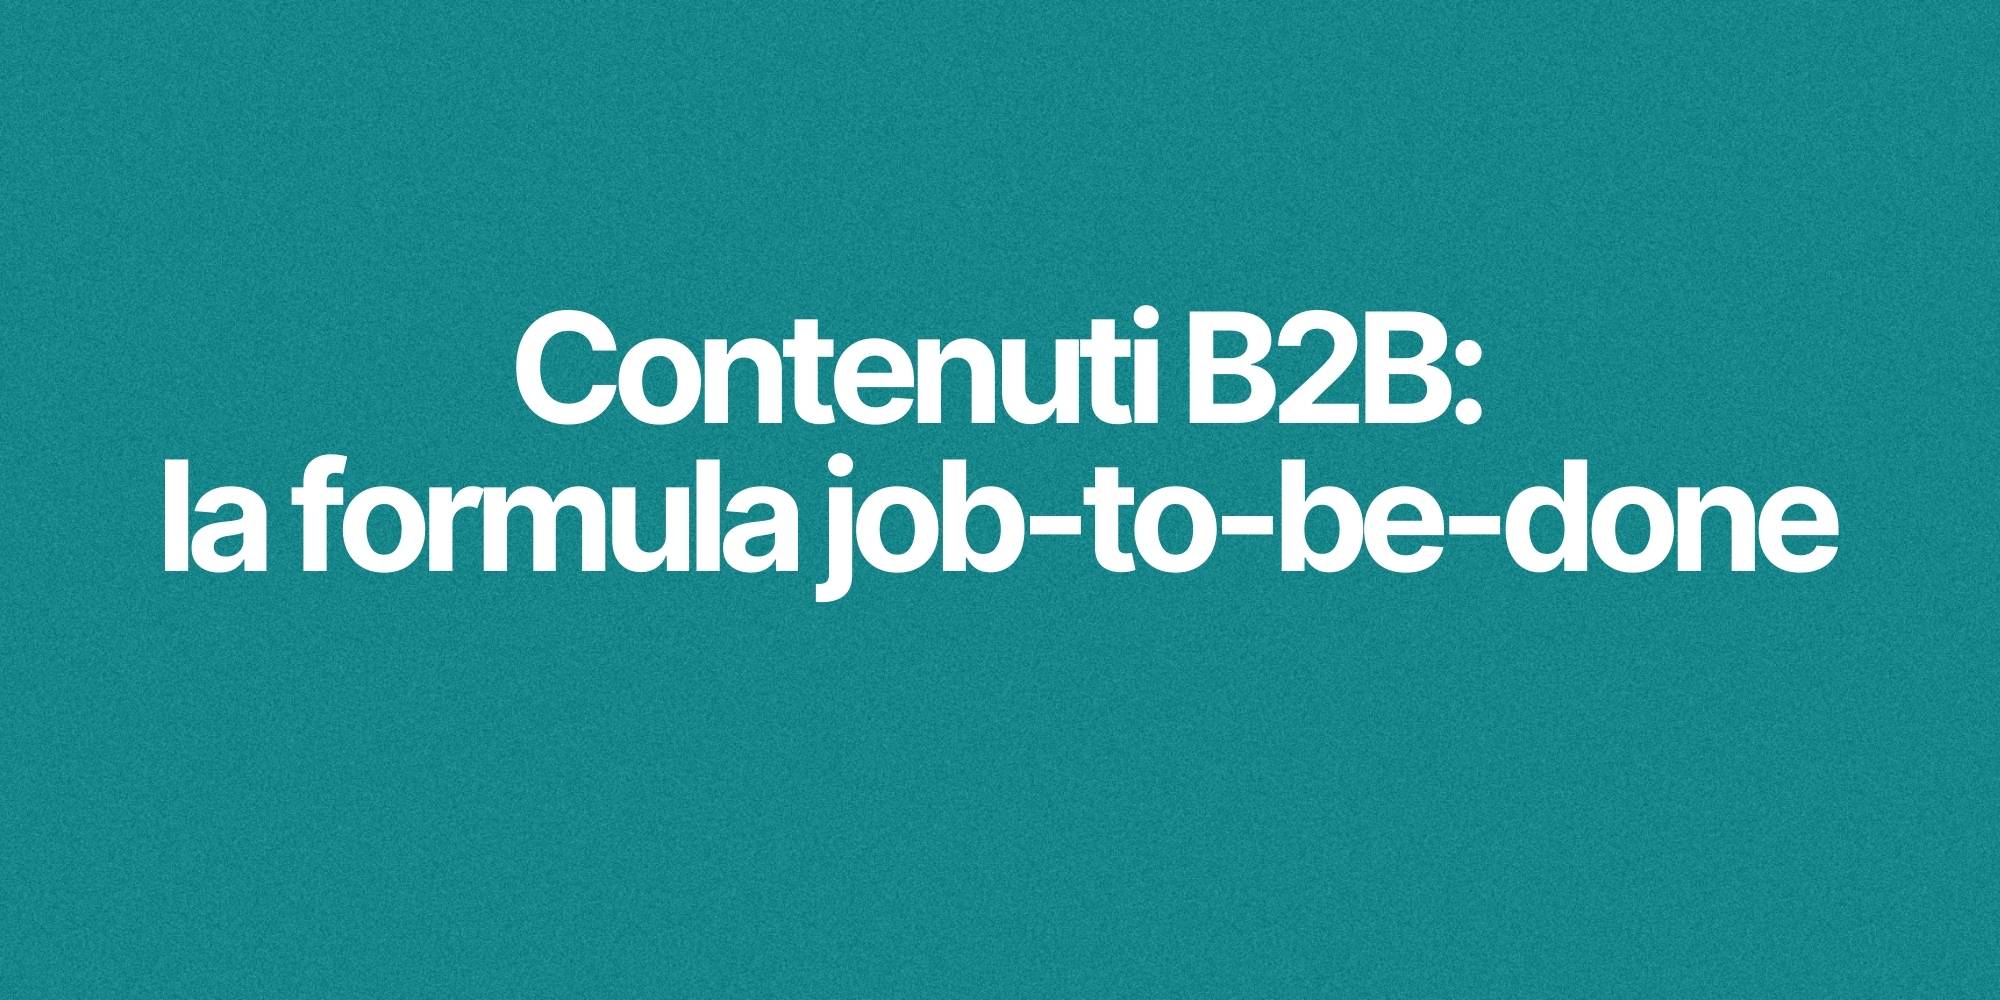 contenuti B2B: job-to-be-done